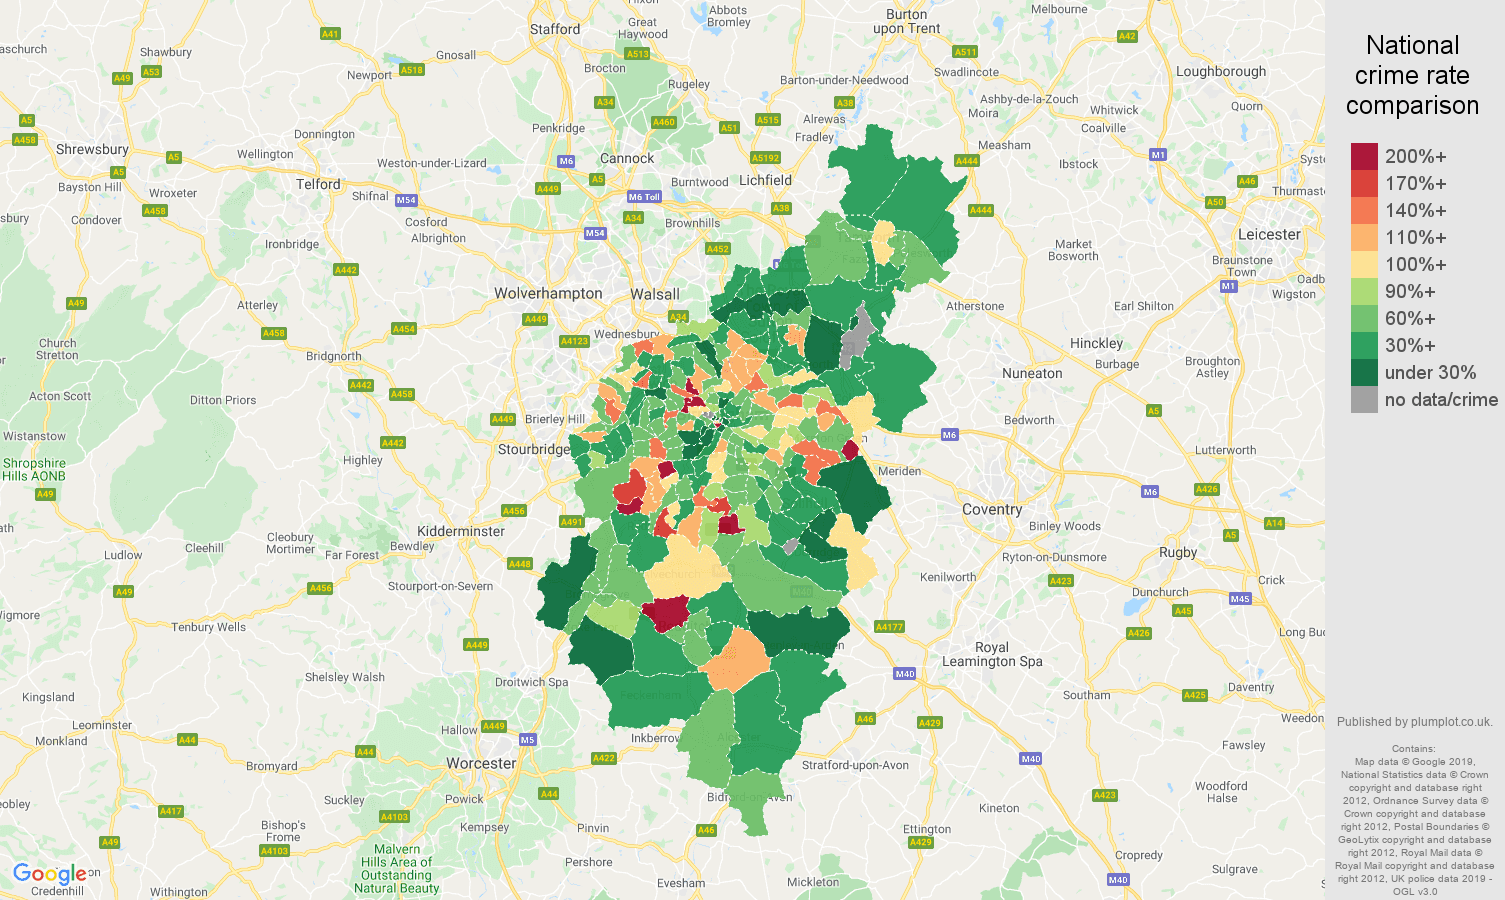 Birmingham other crime rate comparison map